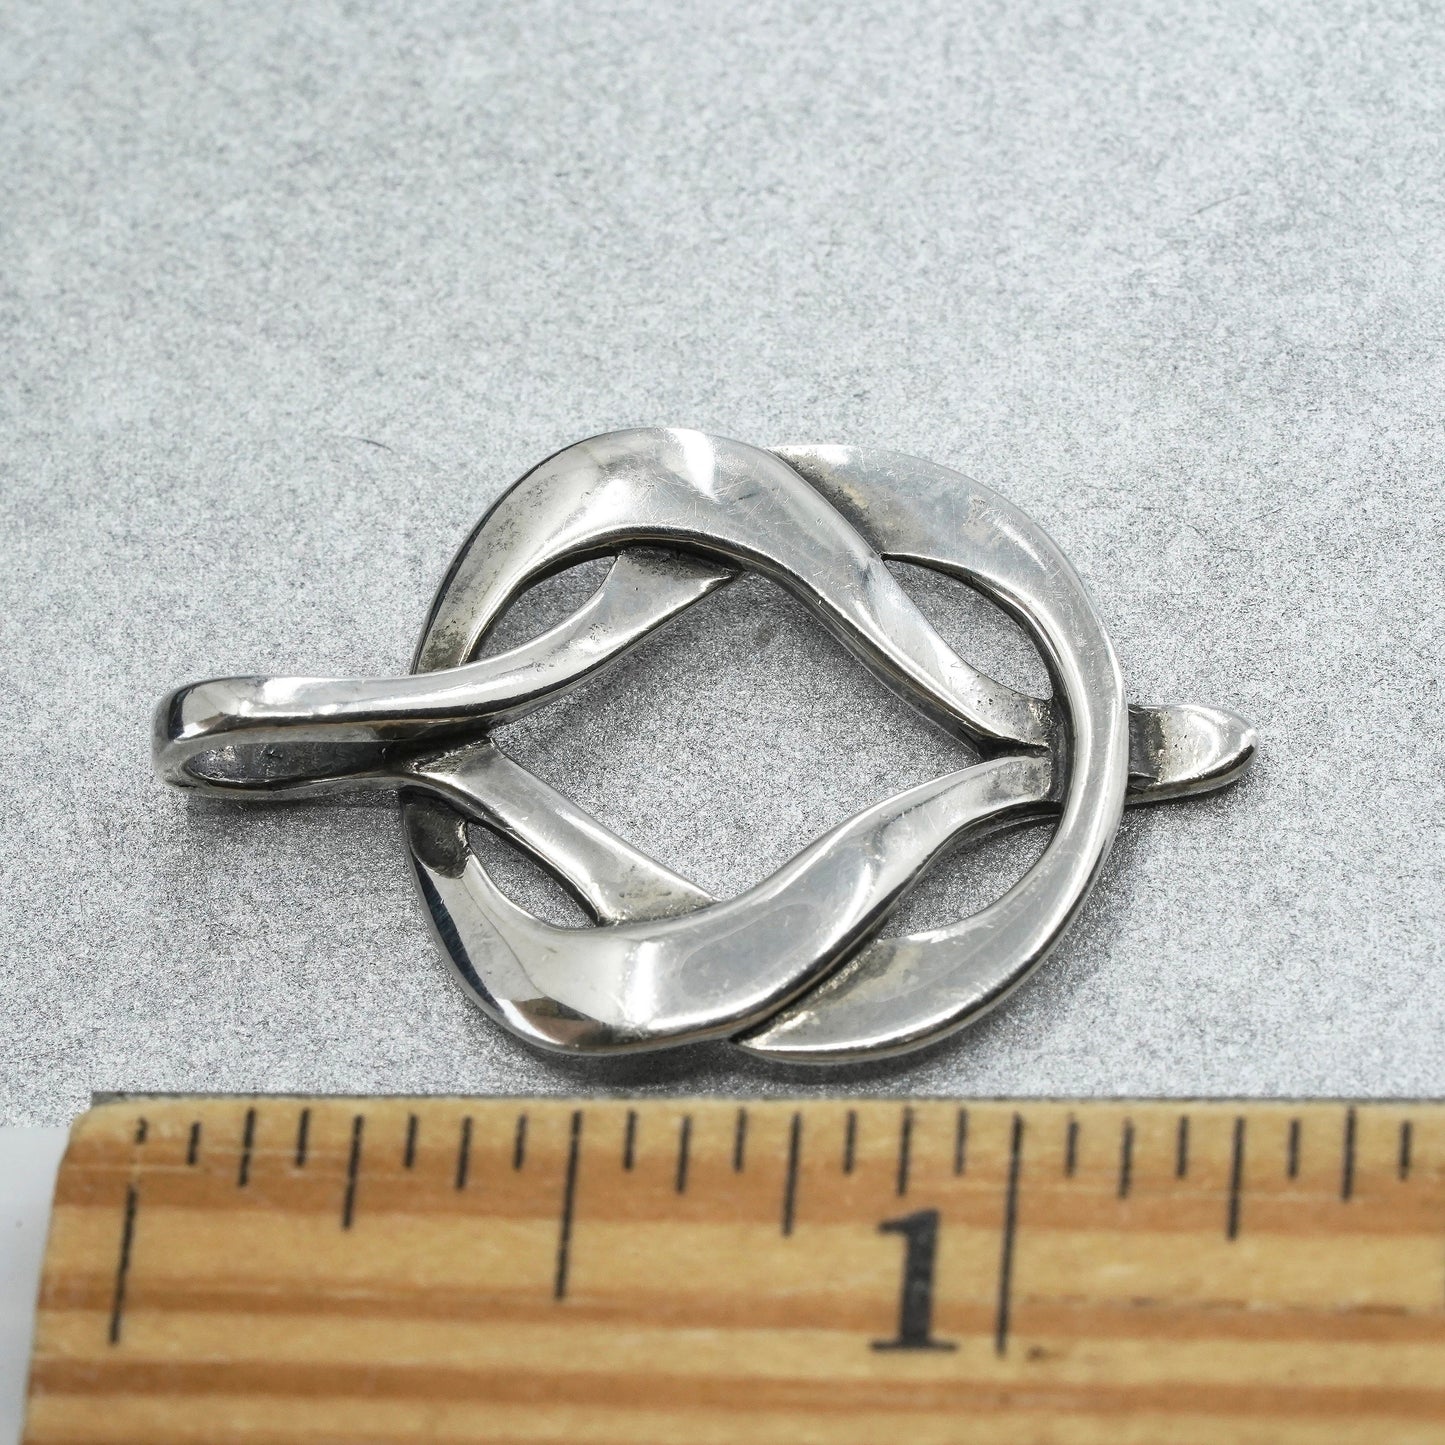 Vintage sterling 925 silver handmade Irish Celtic knot pendant